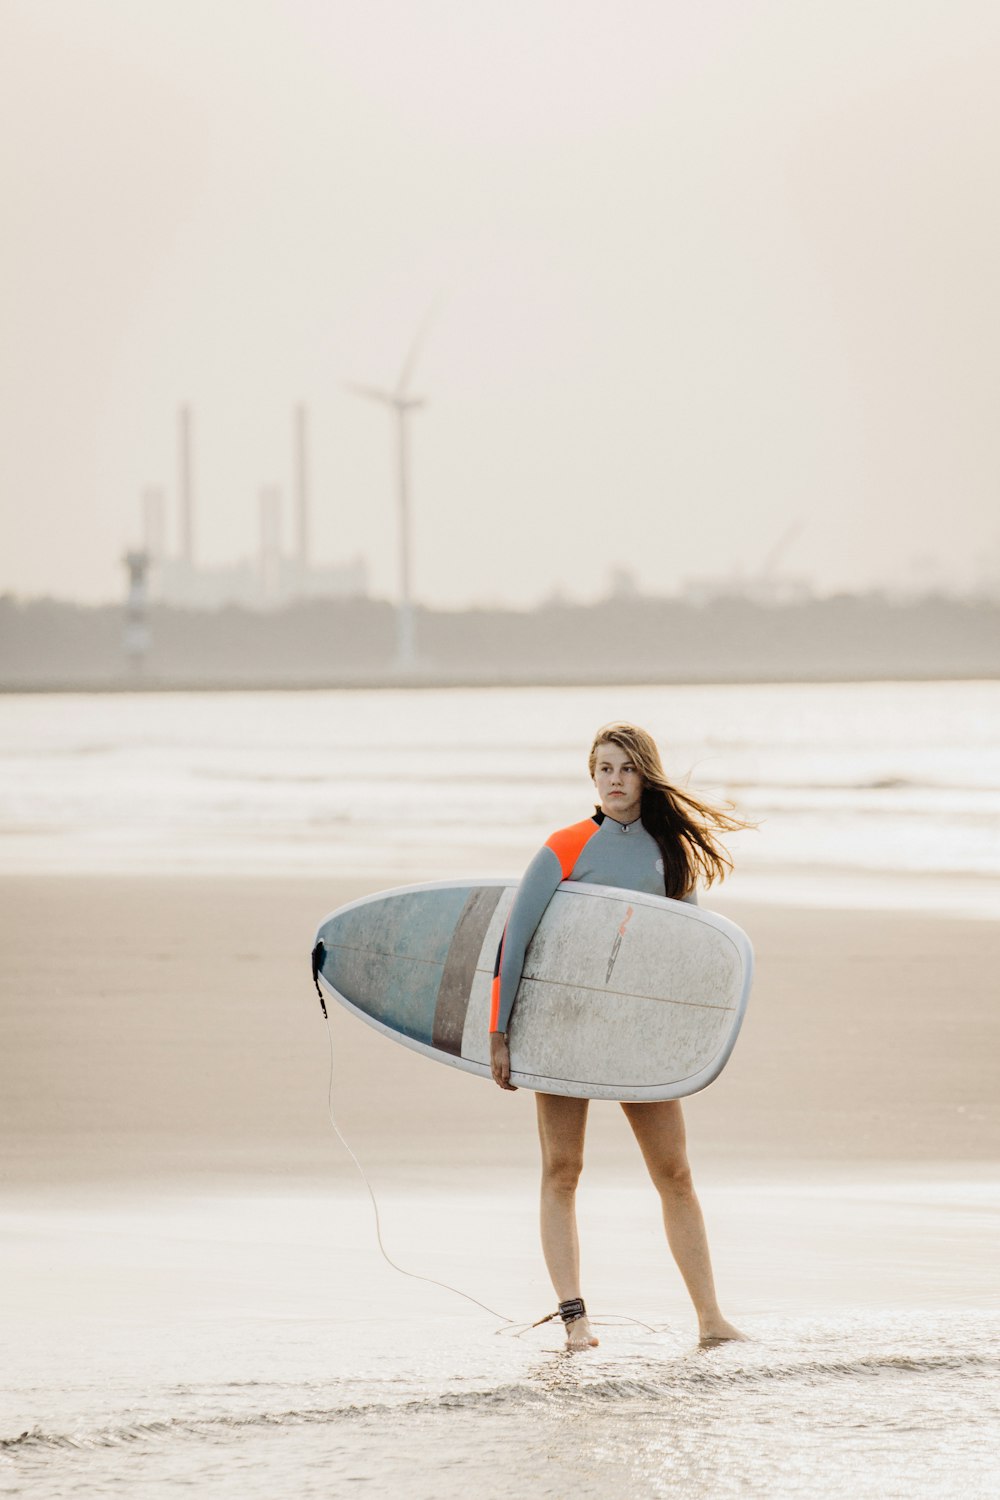 woman standing on seashore carrying surfboard